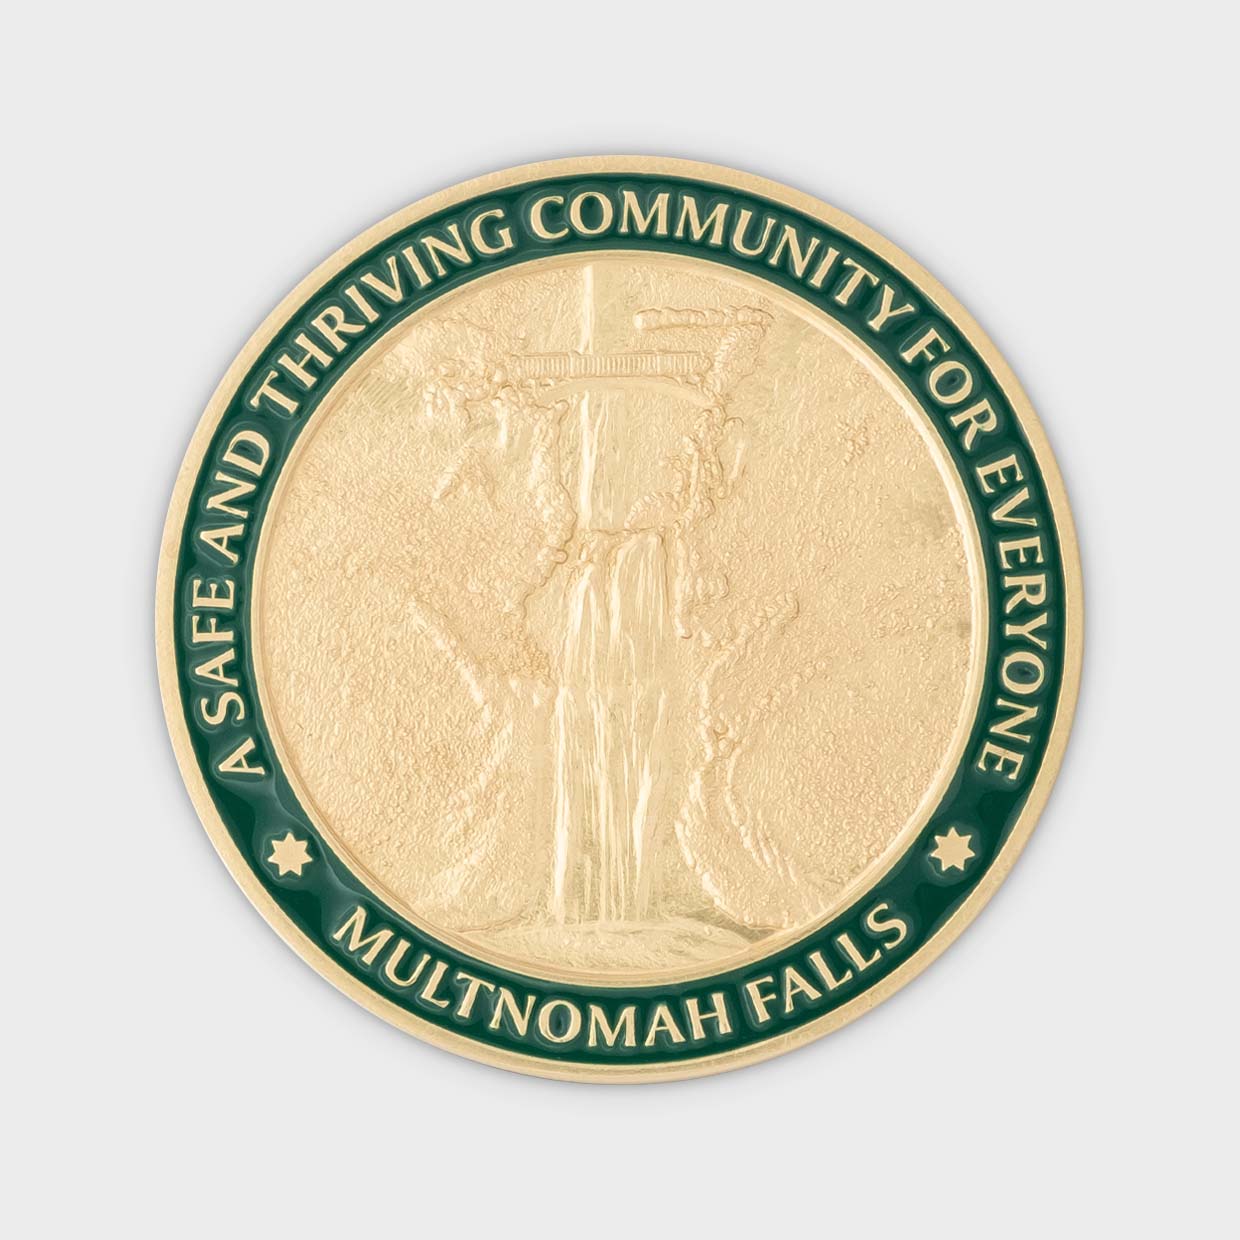 Multnomah County Sheriff's Office Coin Reverse